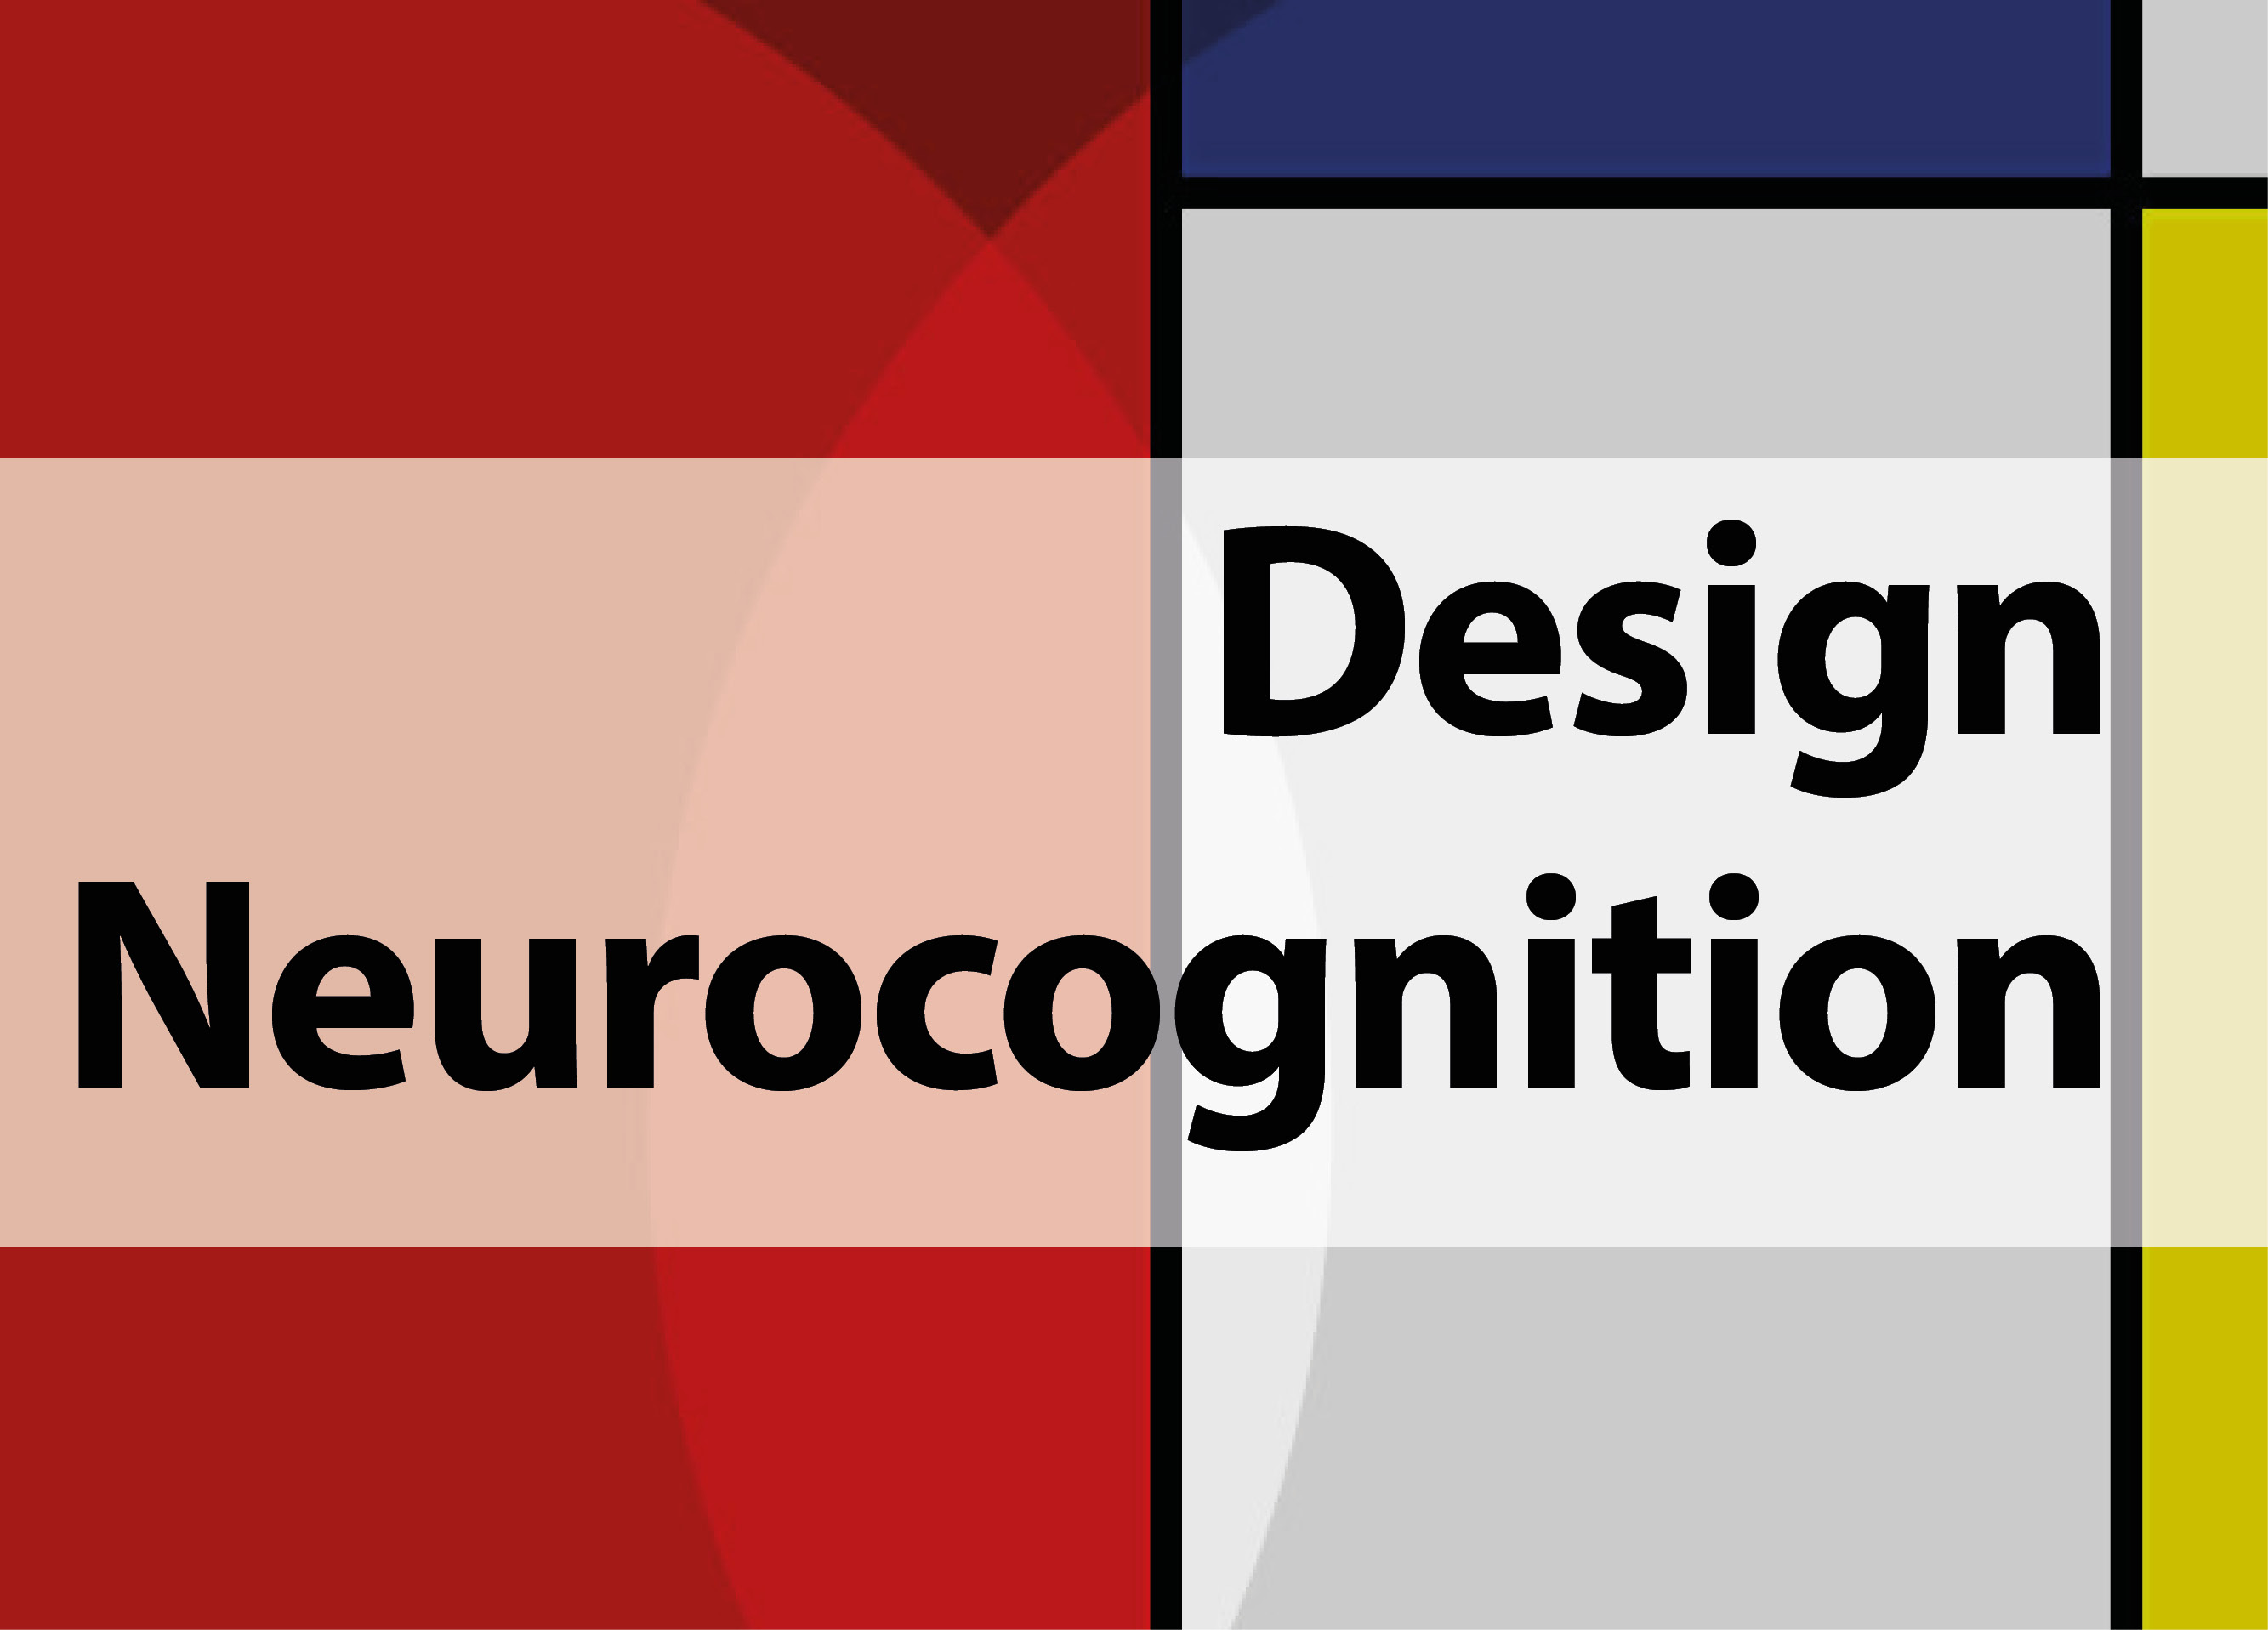 Design Neurocognition